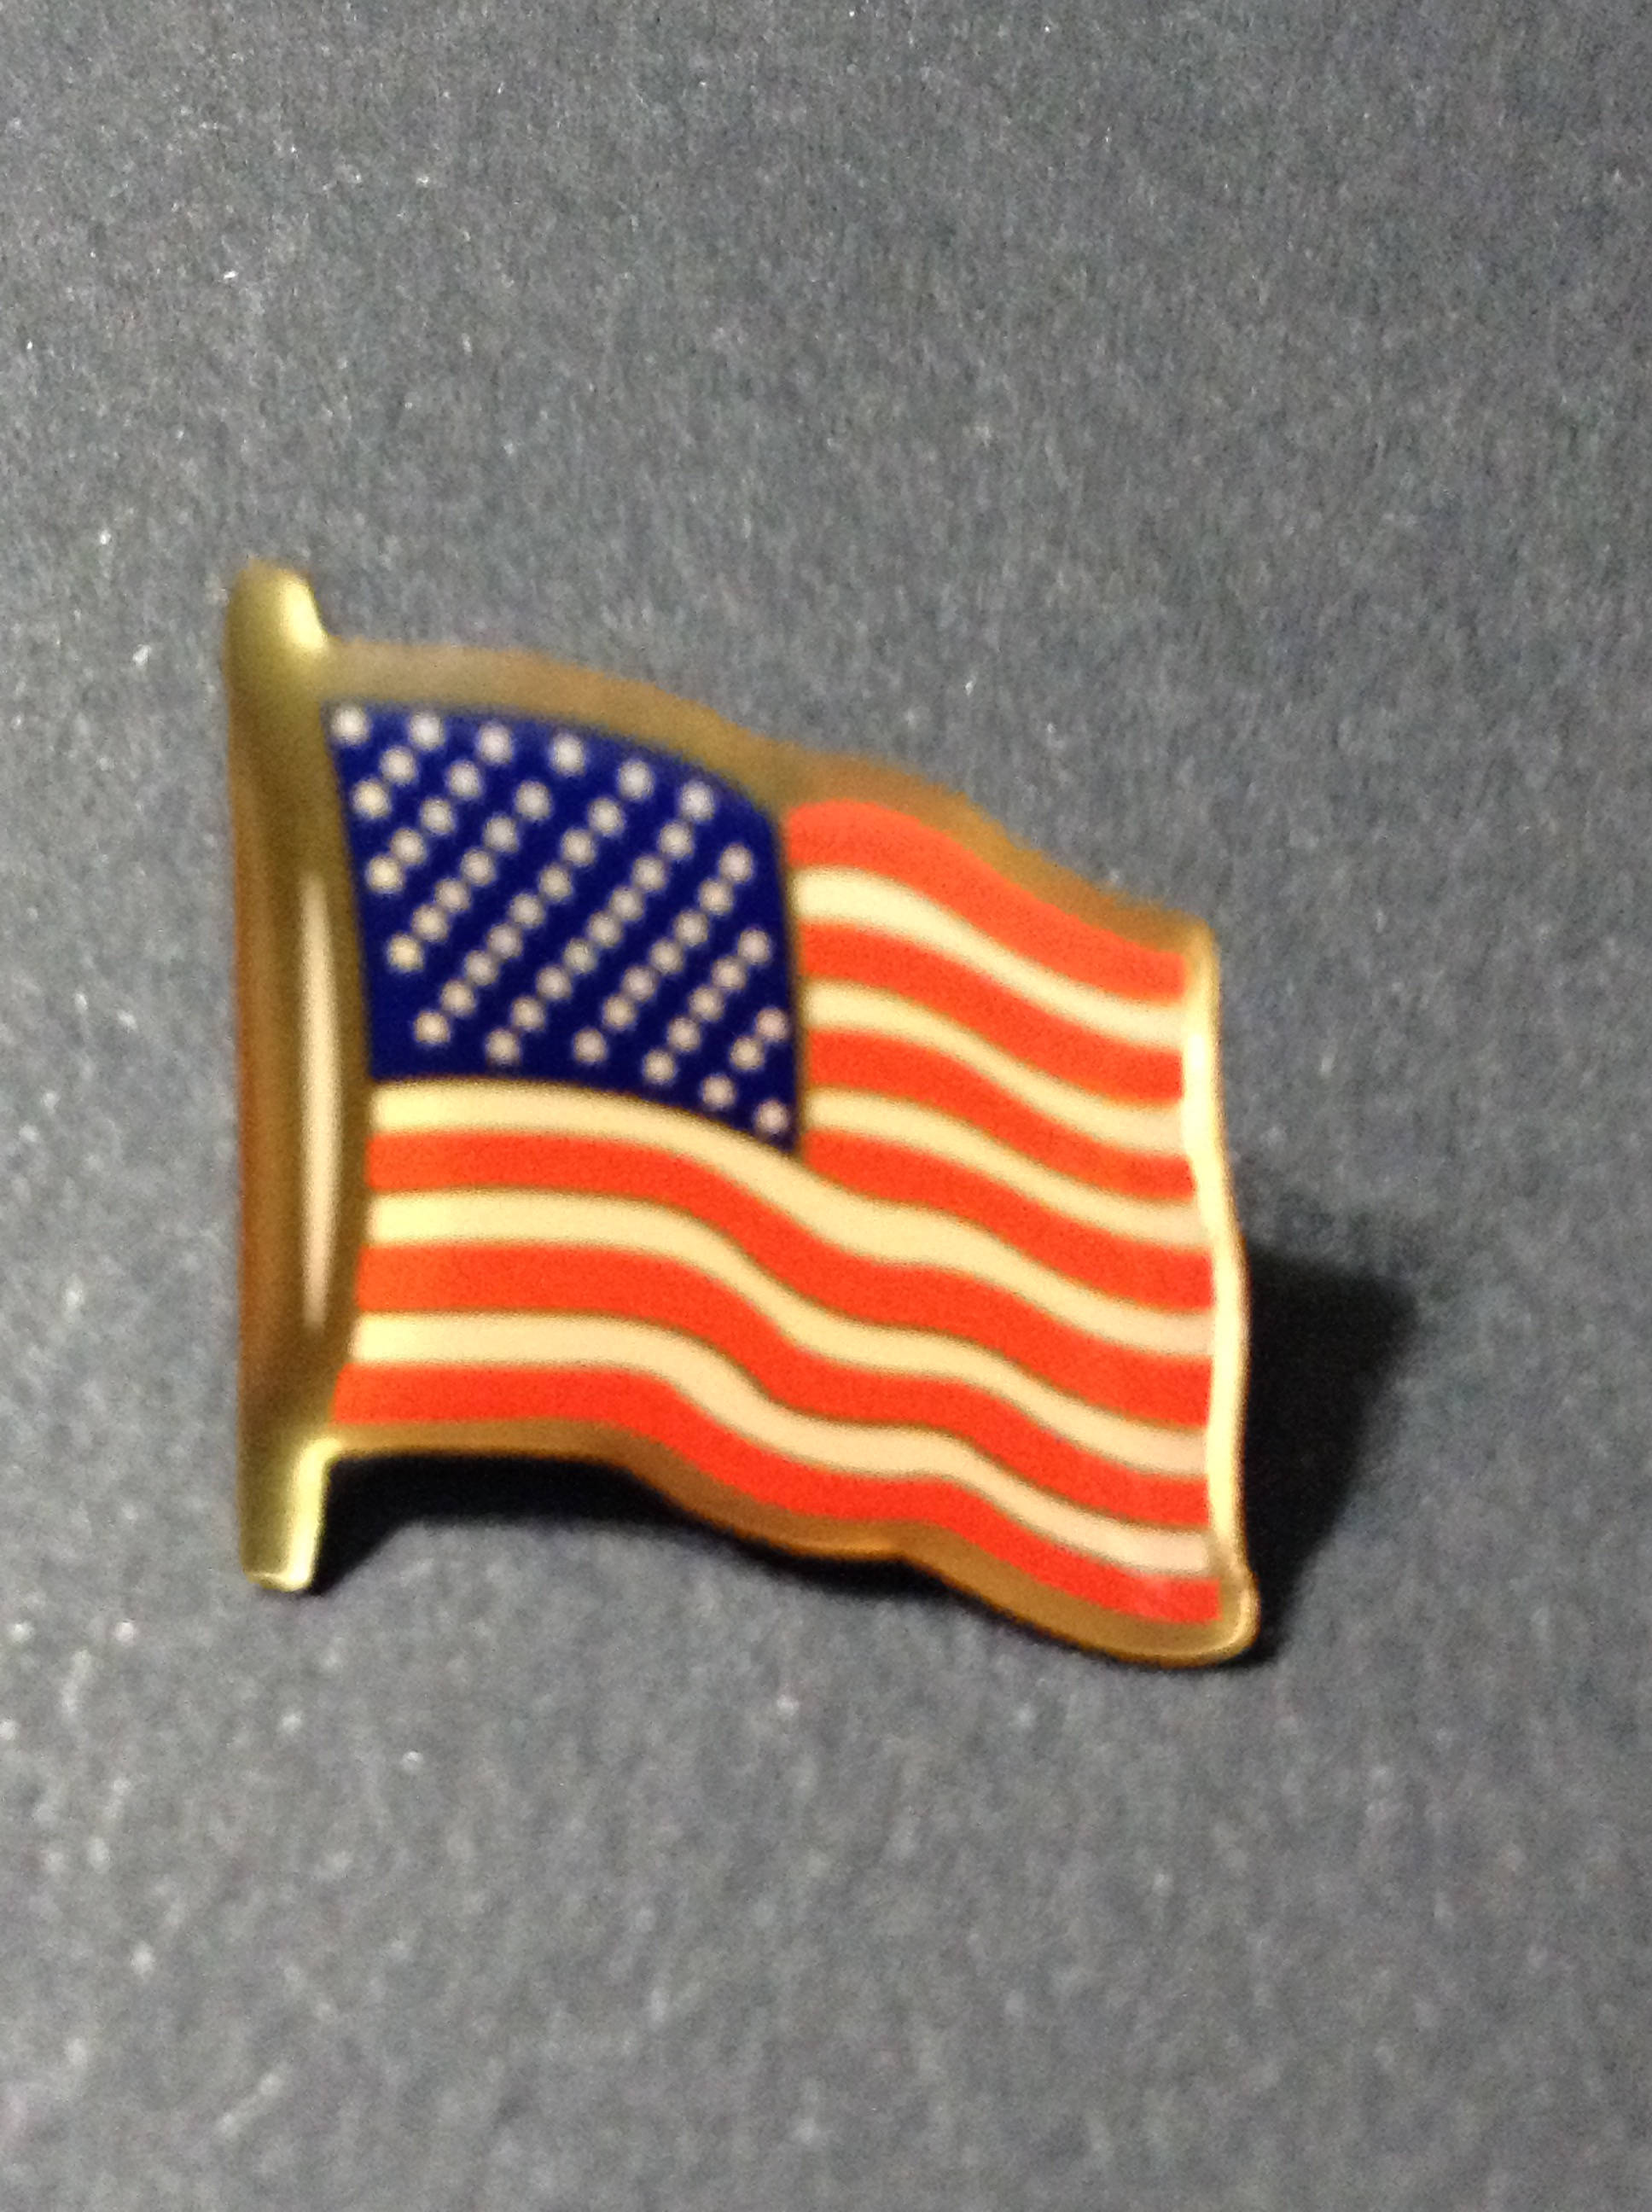 American flag clutch pin hat pin lapel pin hard enameled | Etsy